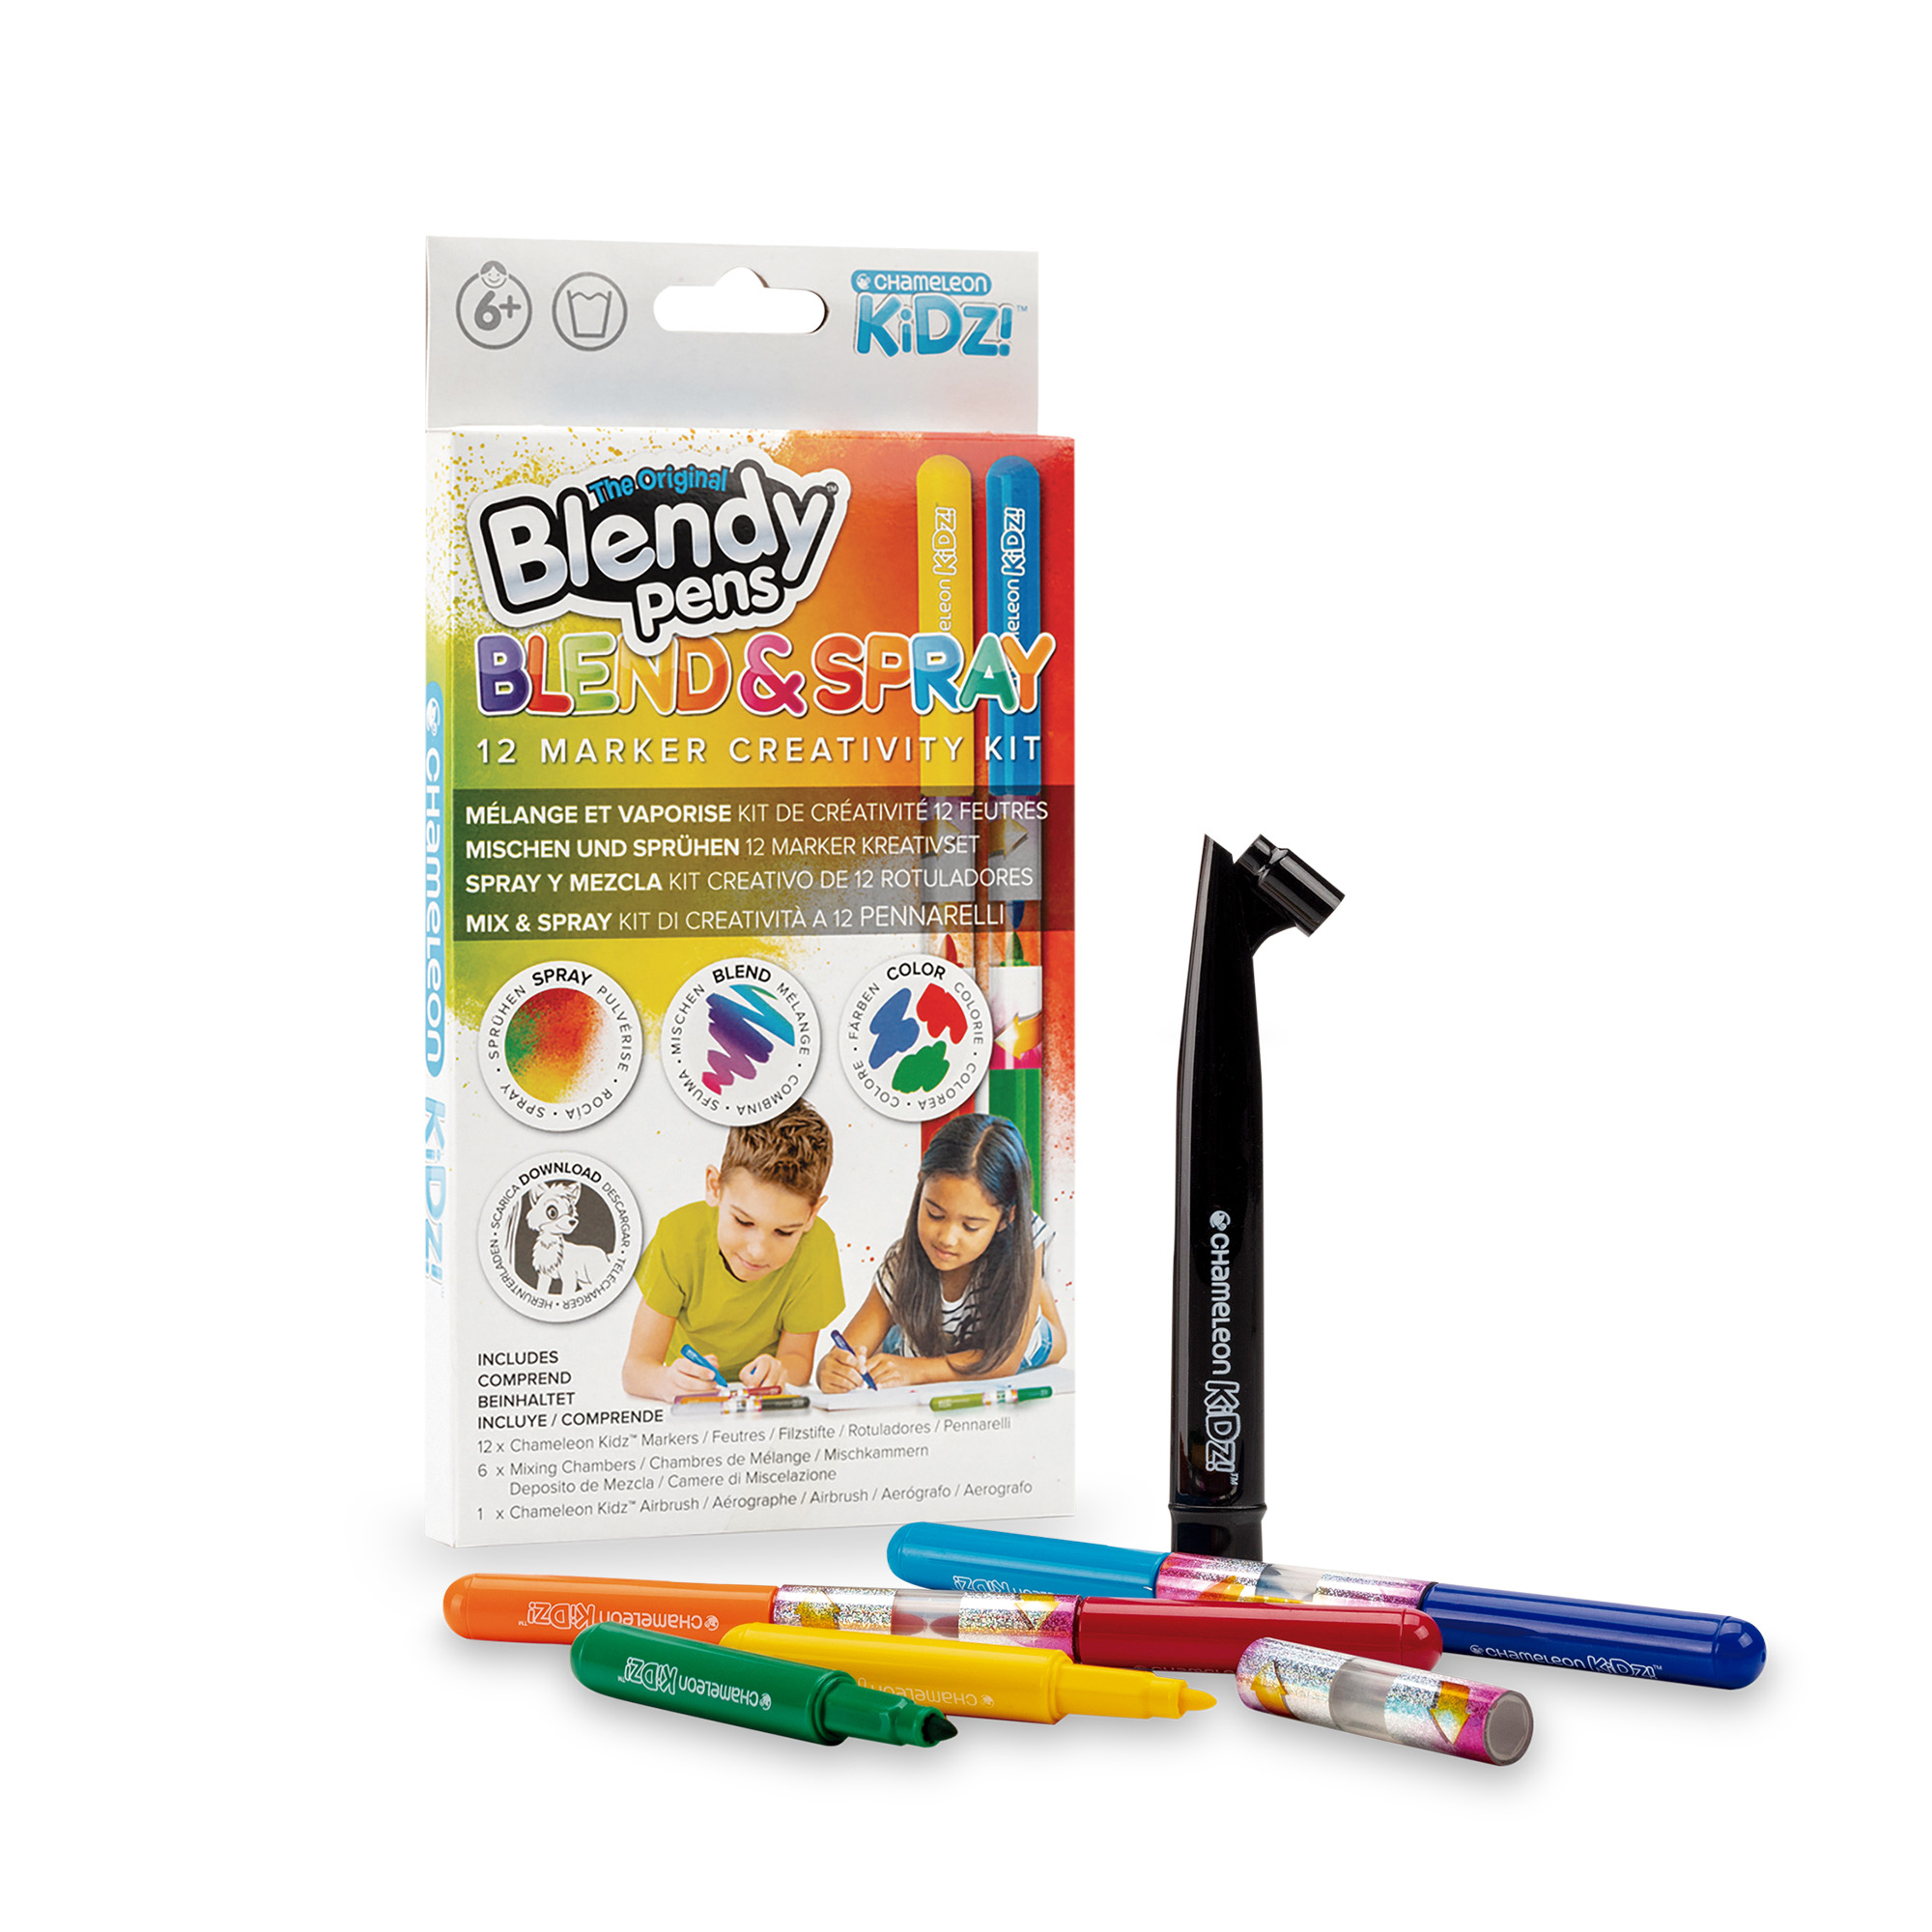 blendy pens blend & spray kit  ( famosa - bld01111)